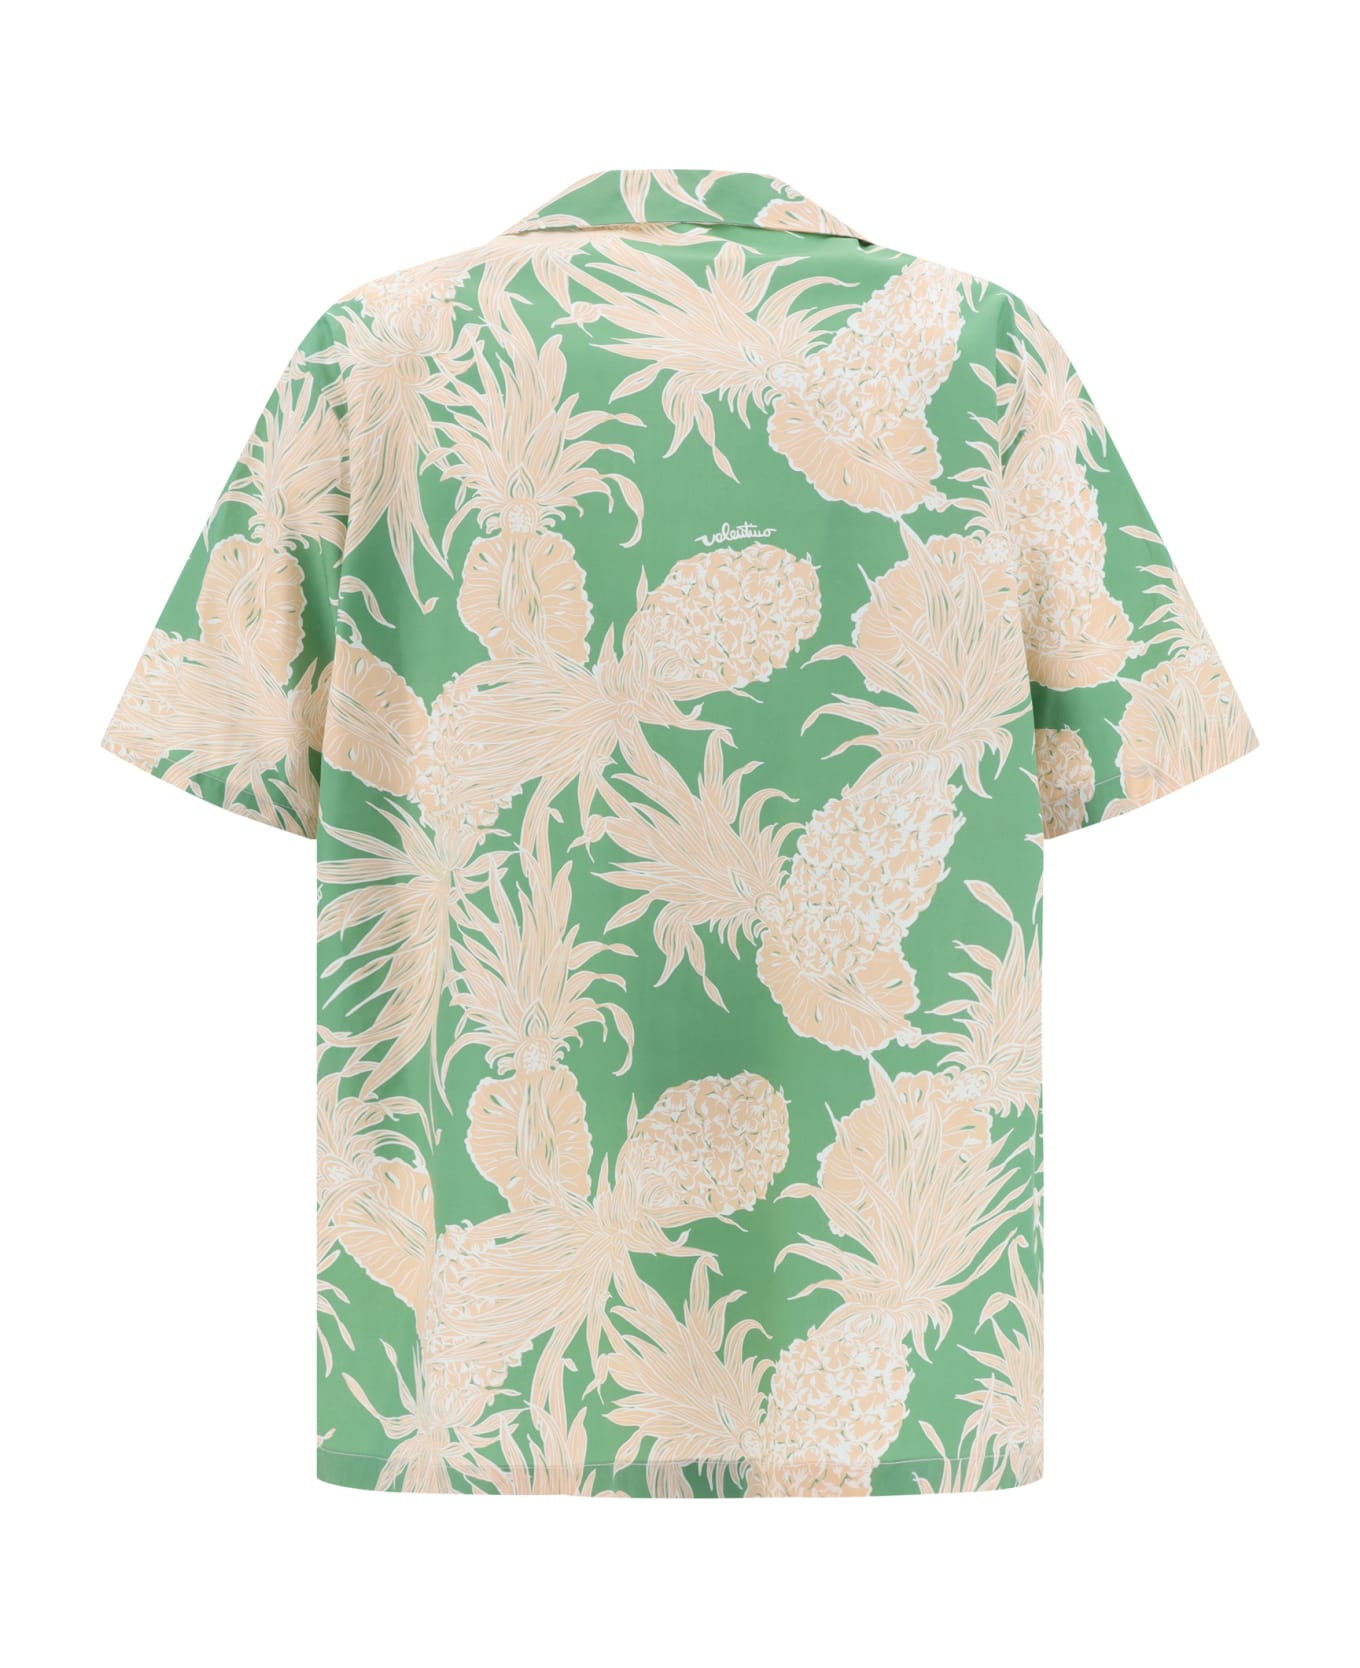 Valentino Printed Cotton Shirt - St Pineapple Fdo Verde St Bianco